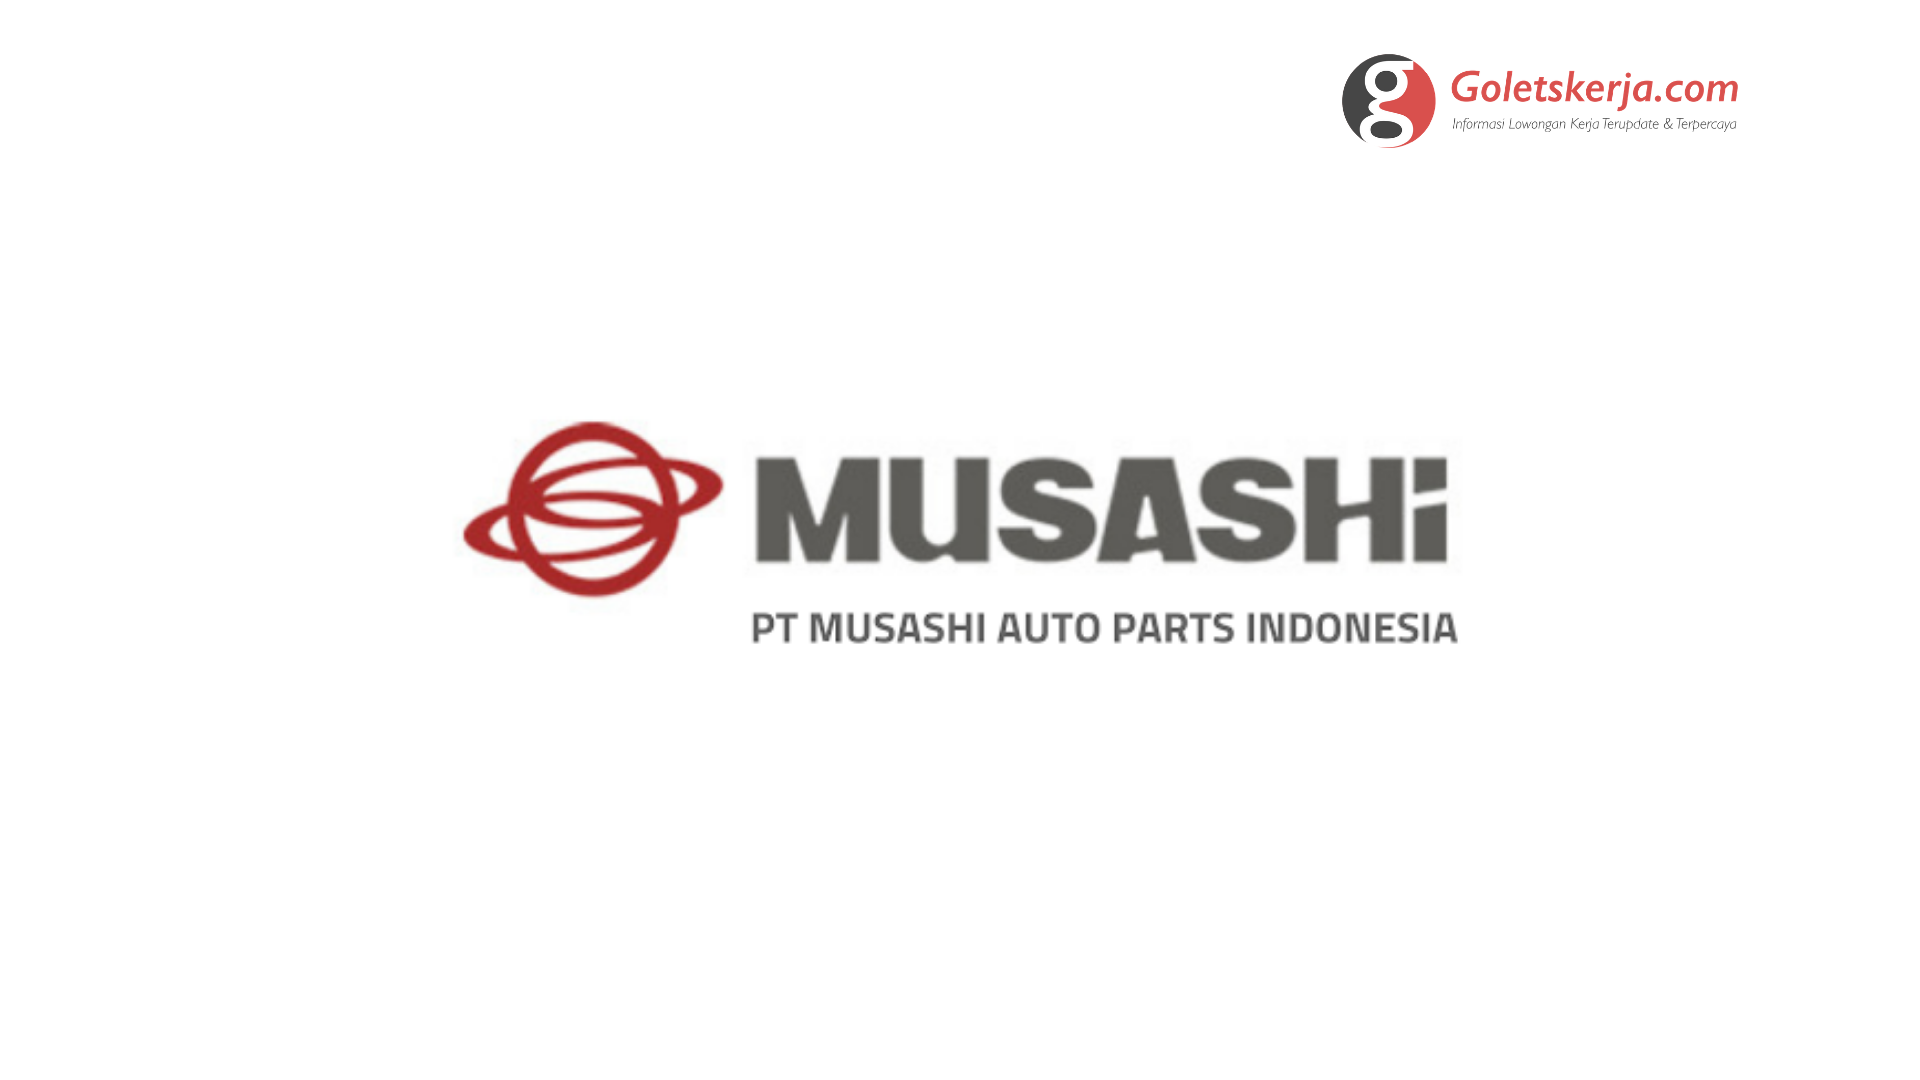 Lowongan Kerja PT Musashi Auto Parts Indonesia - Goletskerja.com